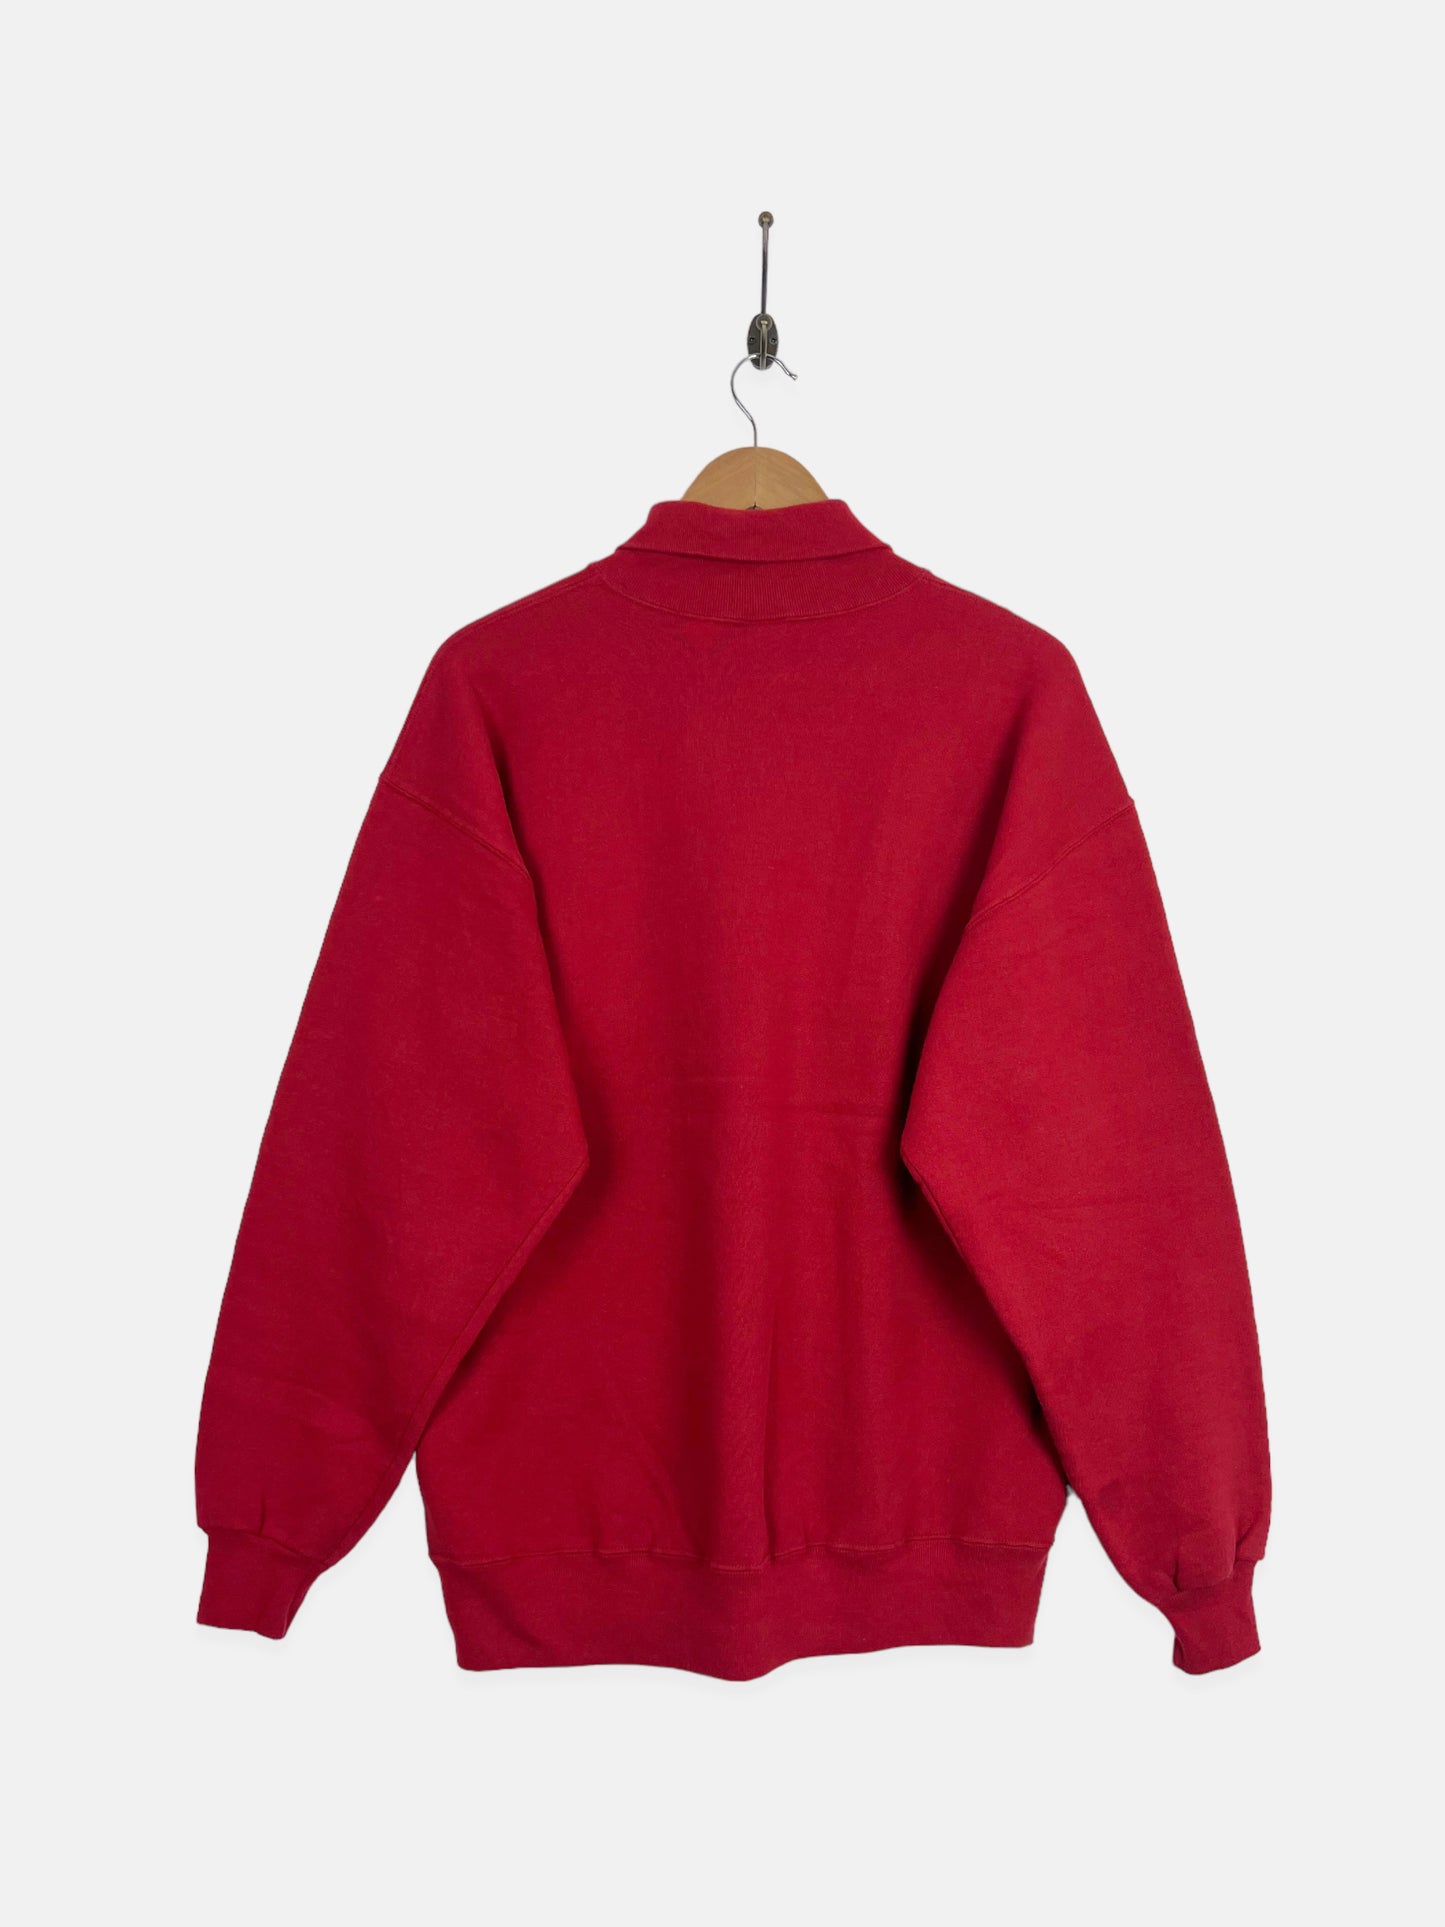 90's Summa & Iezzi USA Made Embroidered Vintage Mock-Neck Sweatshirt Size L-XL